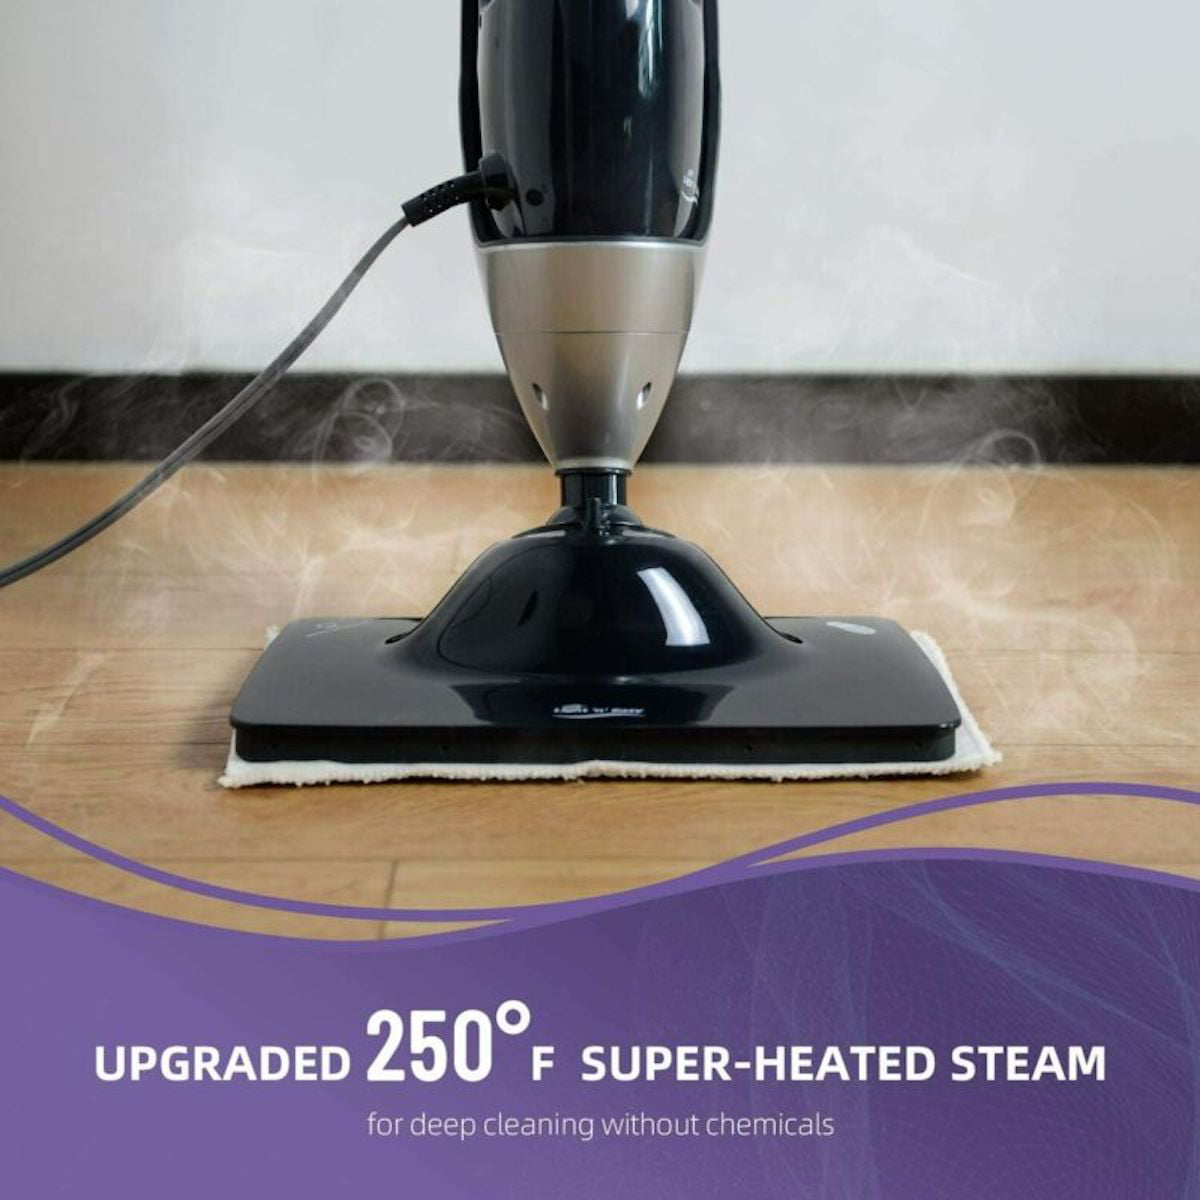 VEVOR Steam Mop 5-in-1 Hard Wood Floor Cleaner with 4 Replaceable Brush Heads for Various Hard Floors Like Ceramic Granite Marble Linoleum Natural